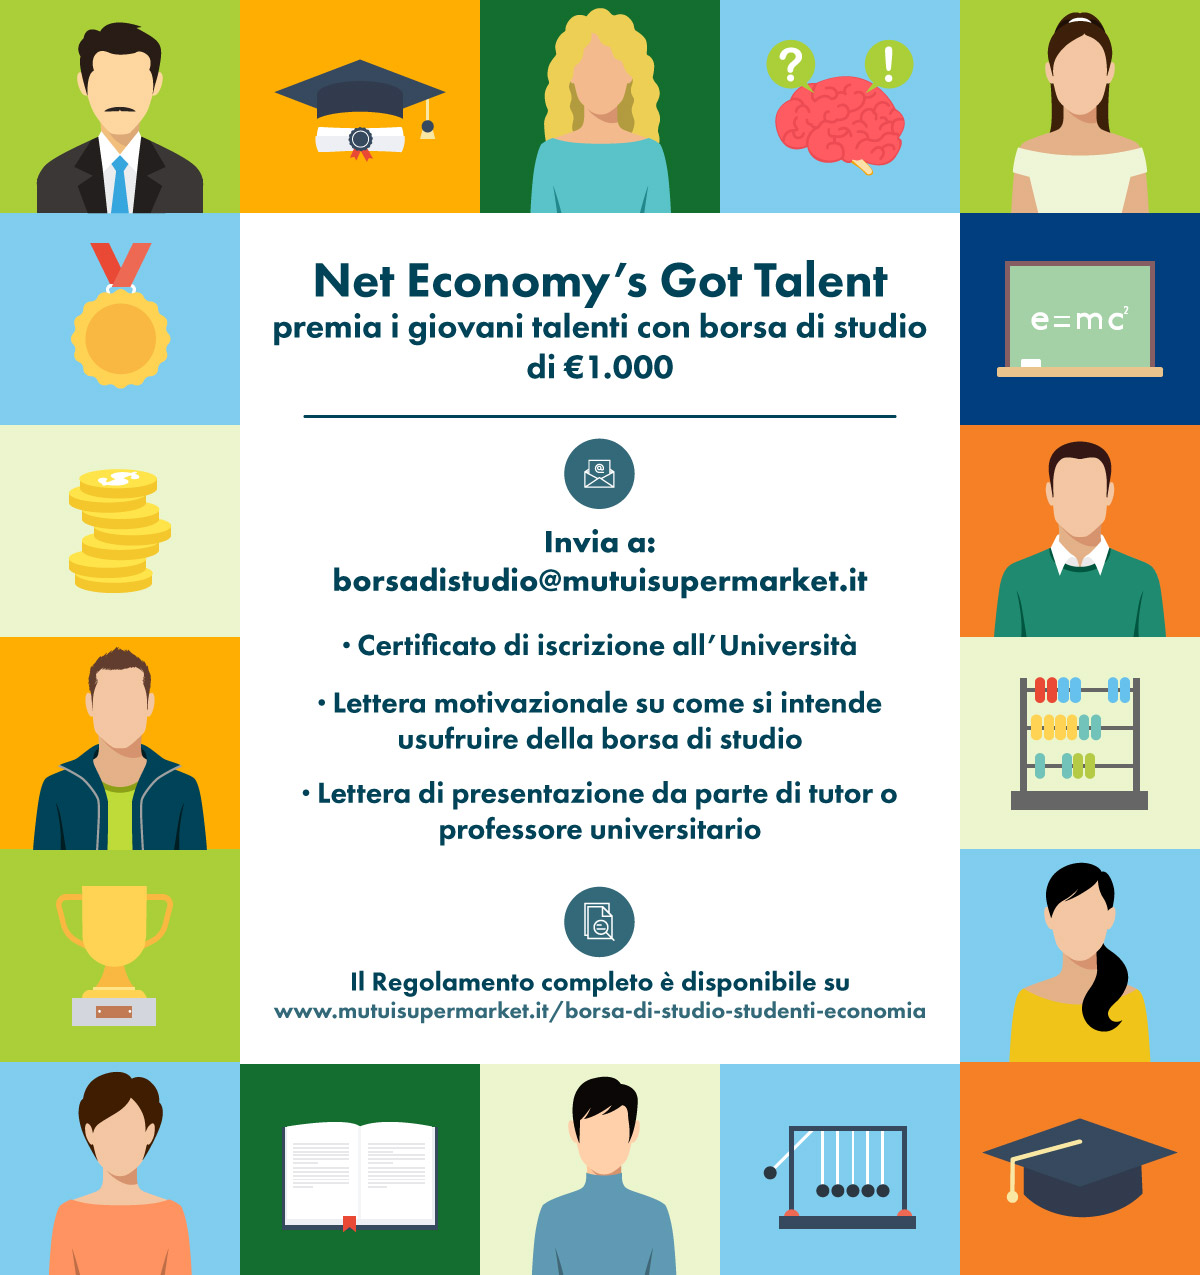 Net Economy’s Got Talent: l’iniziativa che premia i giovani talenti